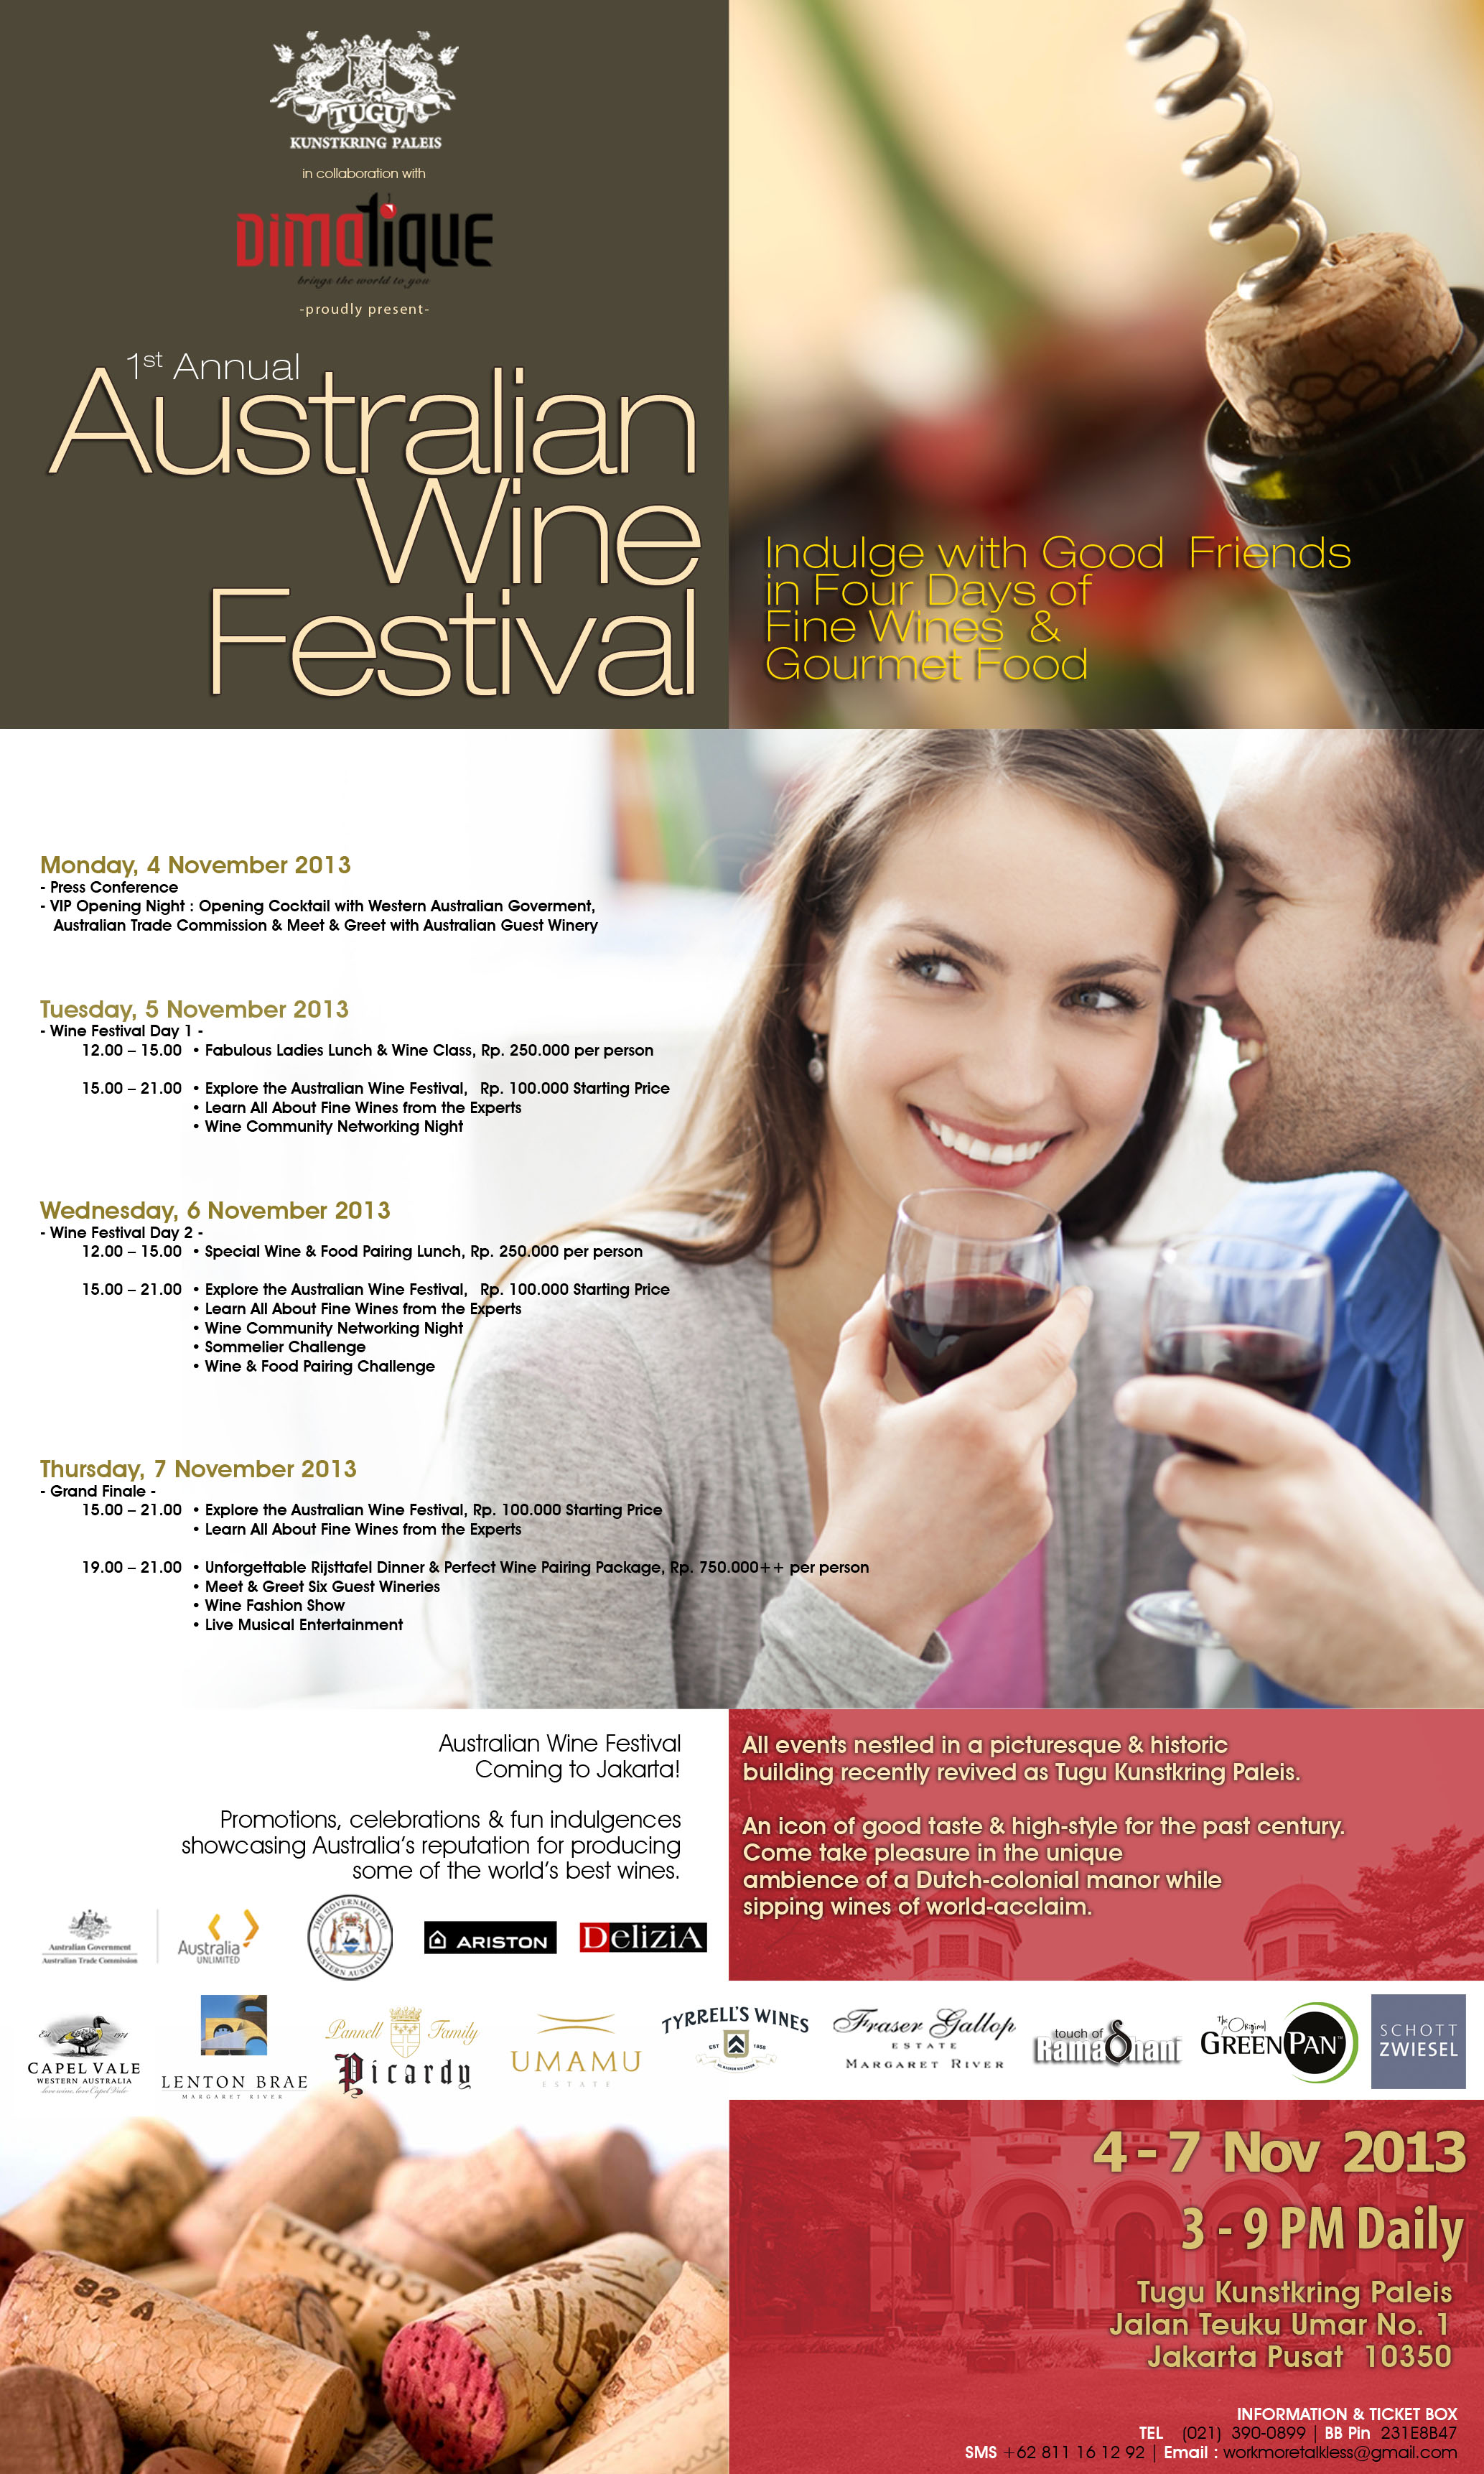 dimotique 1st annual australian wine festival at tugu kunstkring paleis